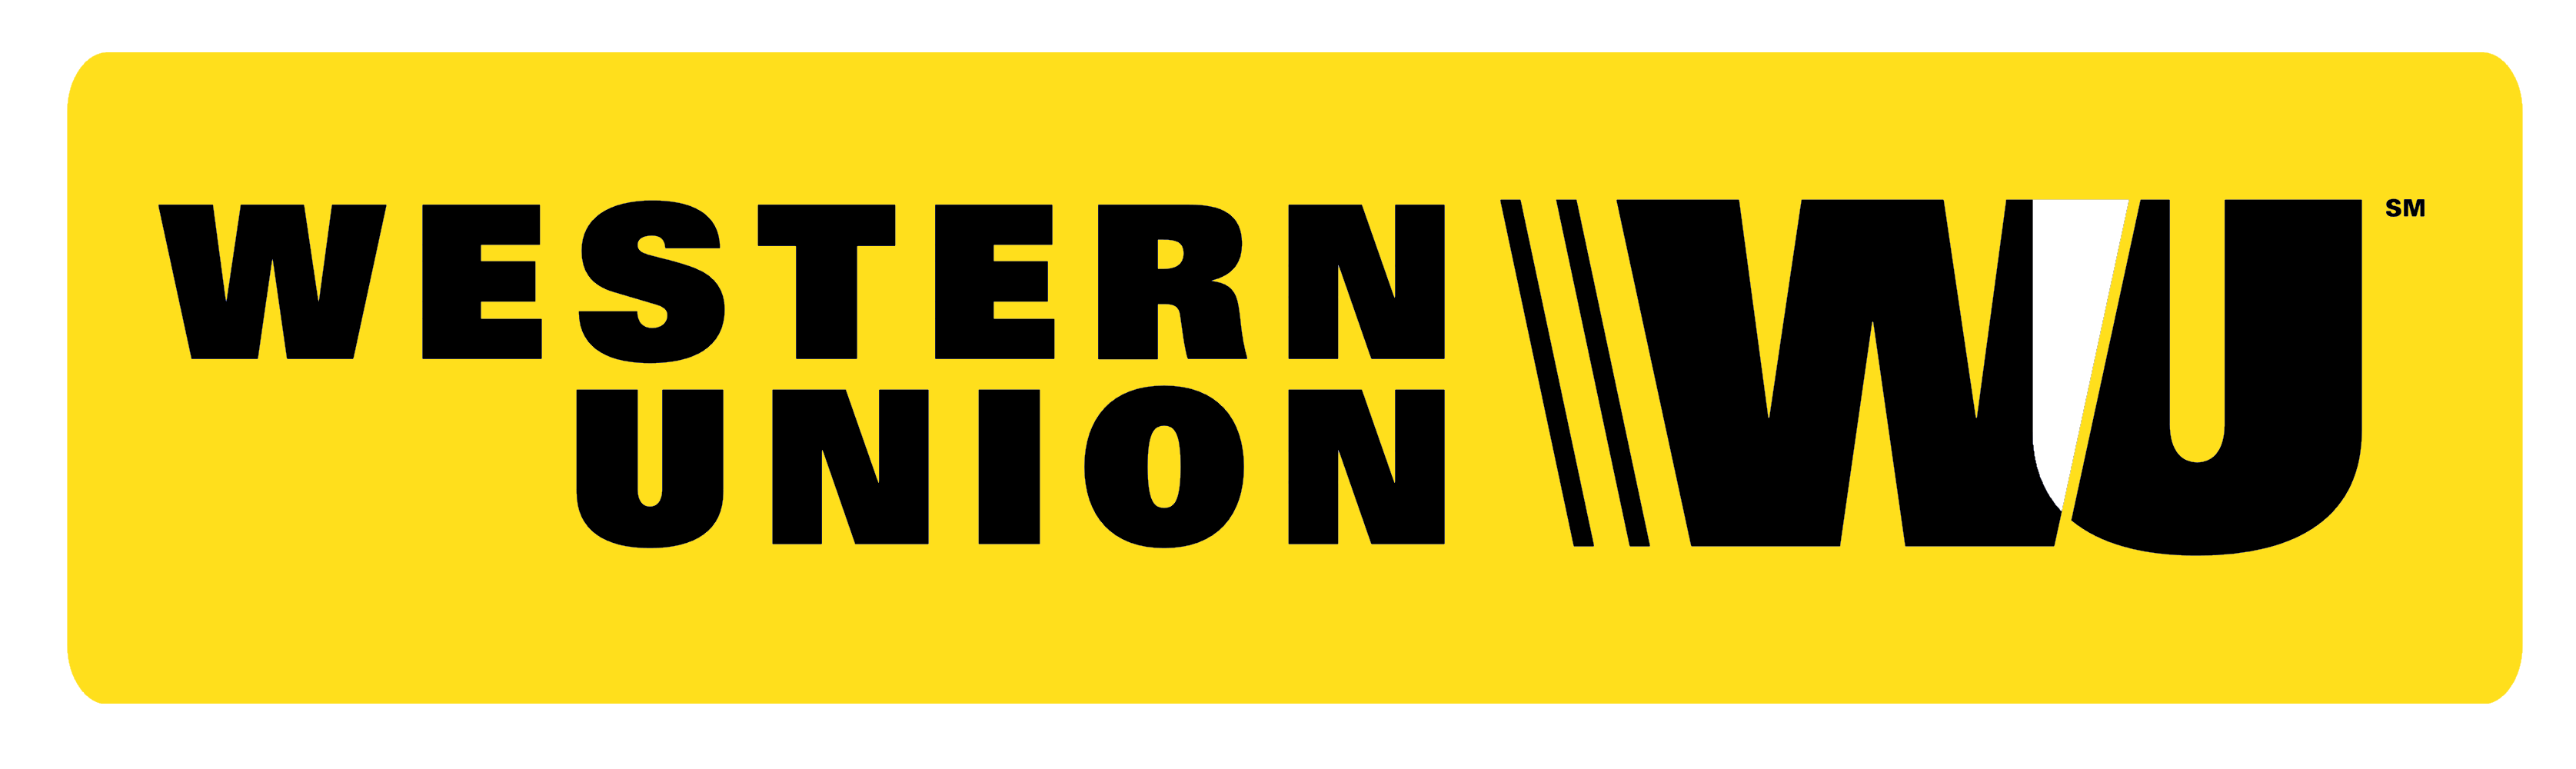 Western Union - Вестерн Юнион